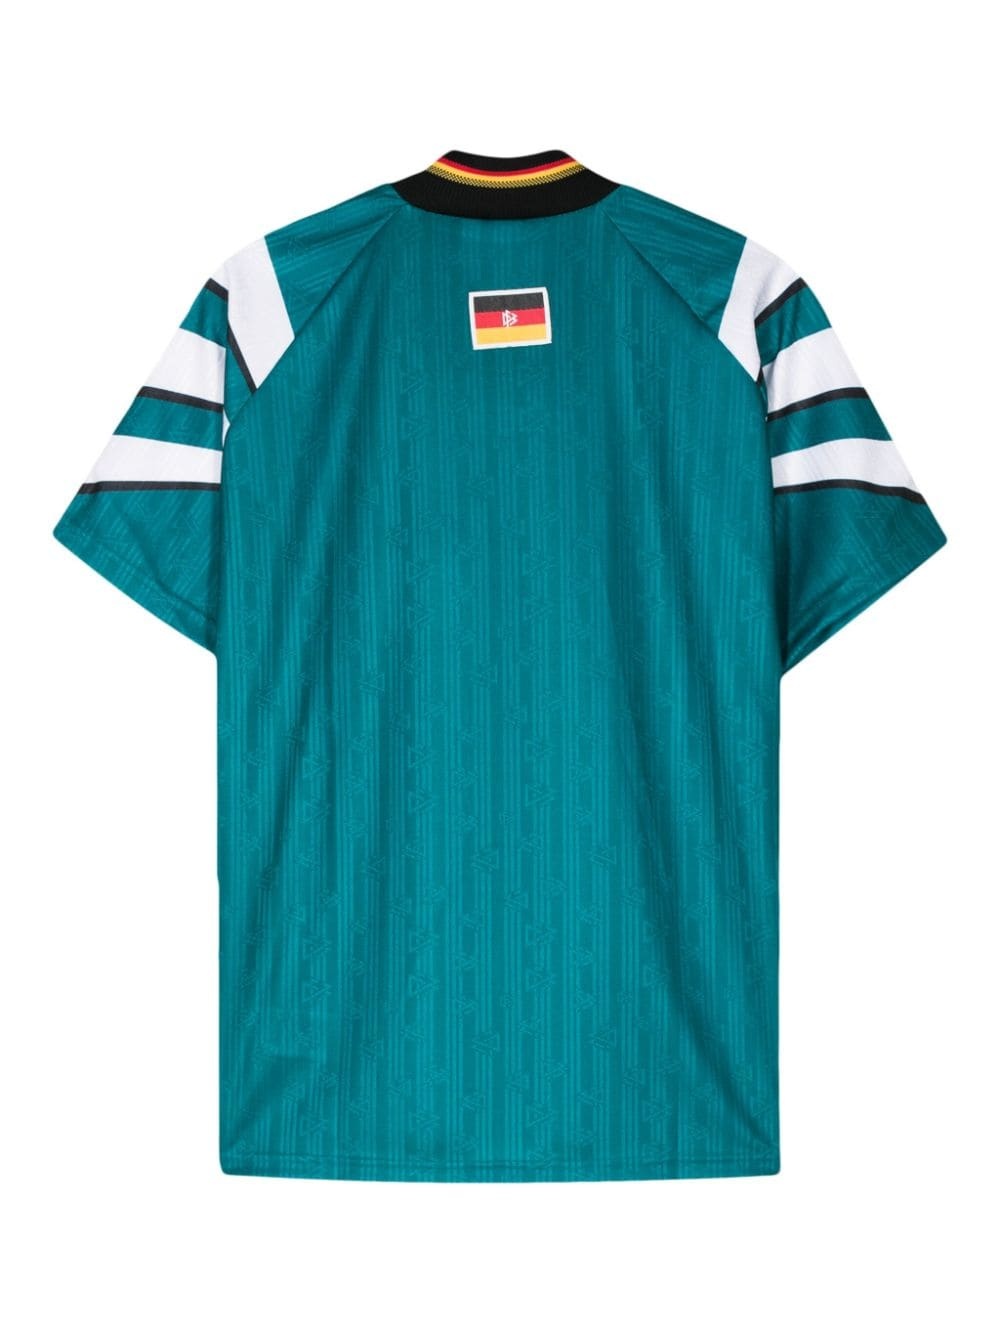 Germany 1996 Away jersey T-shirt - 2